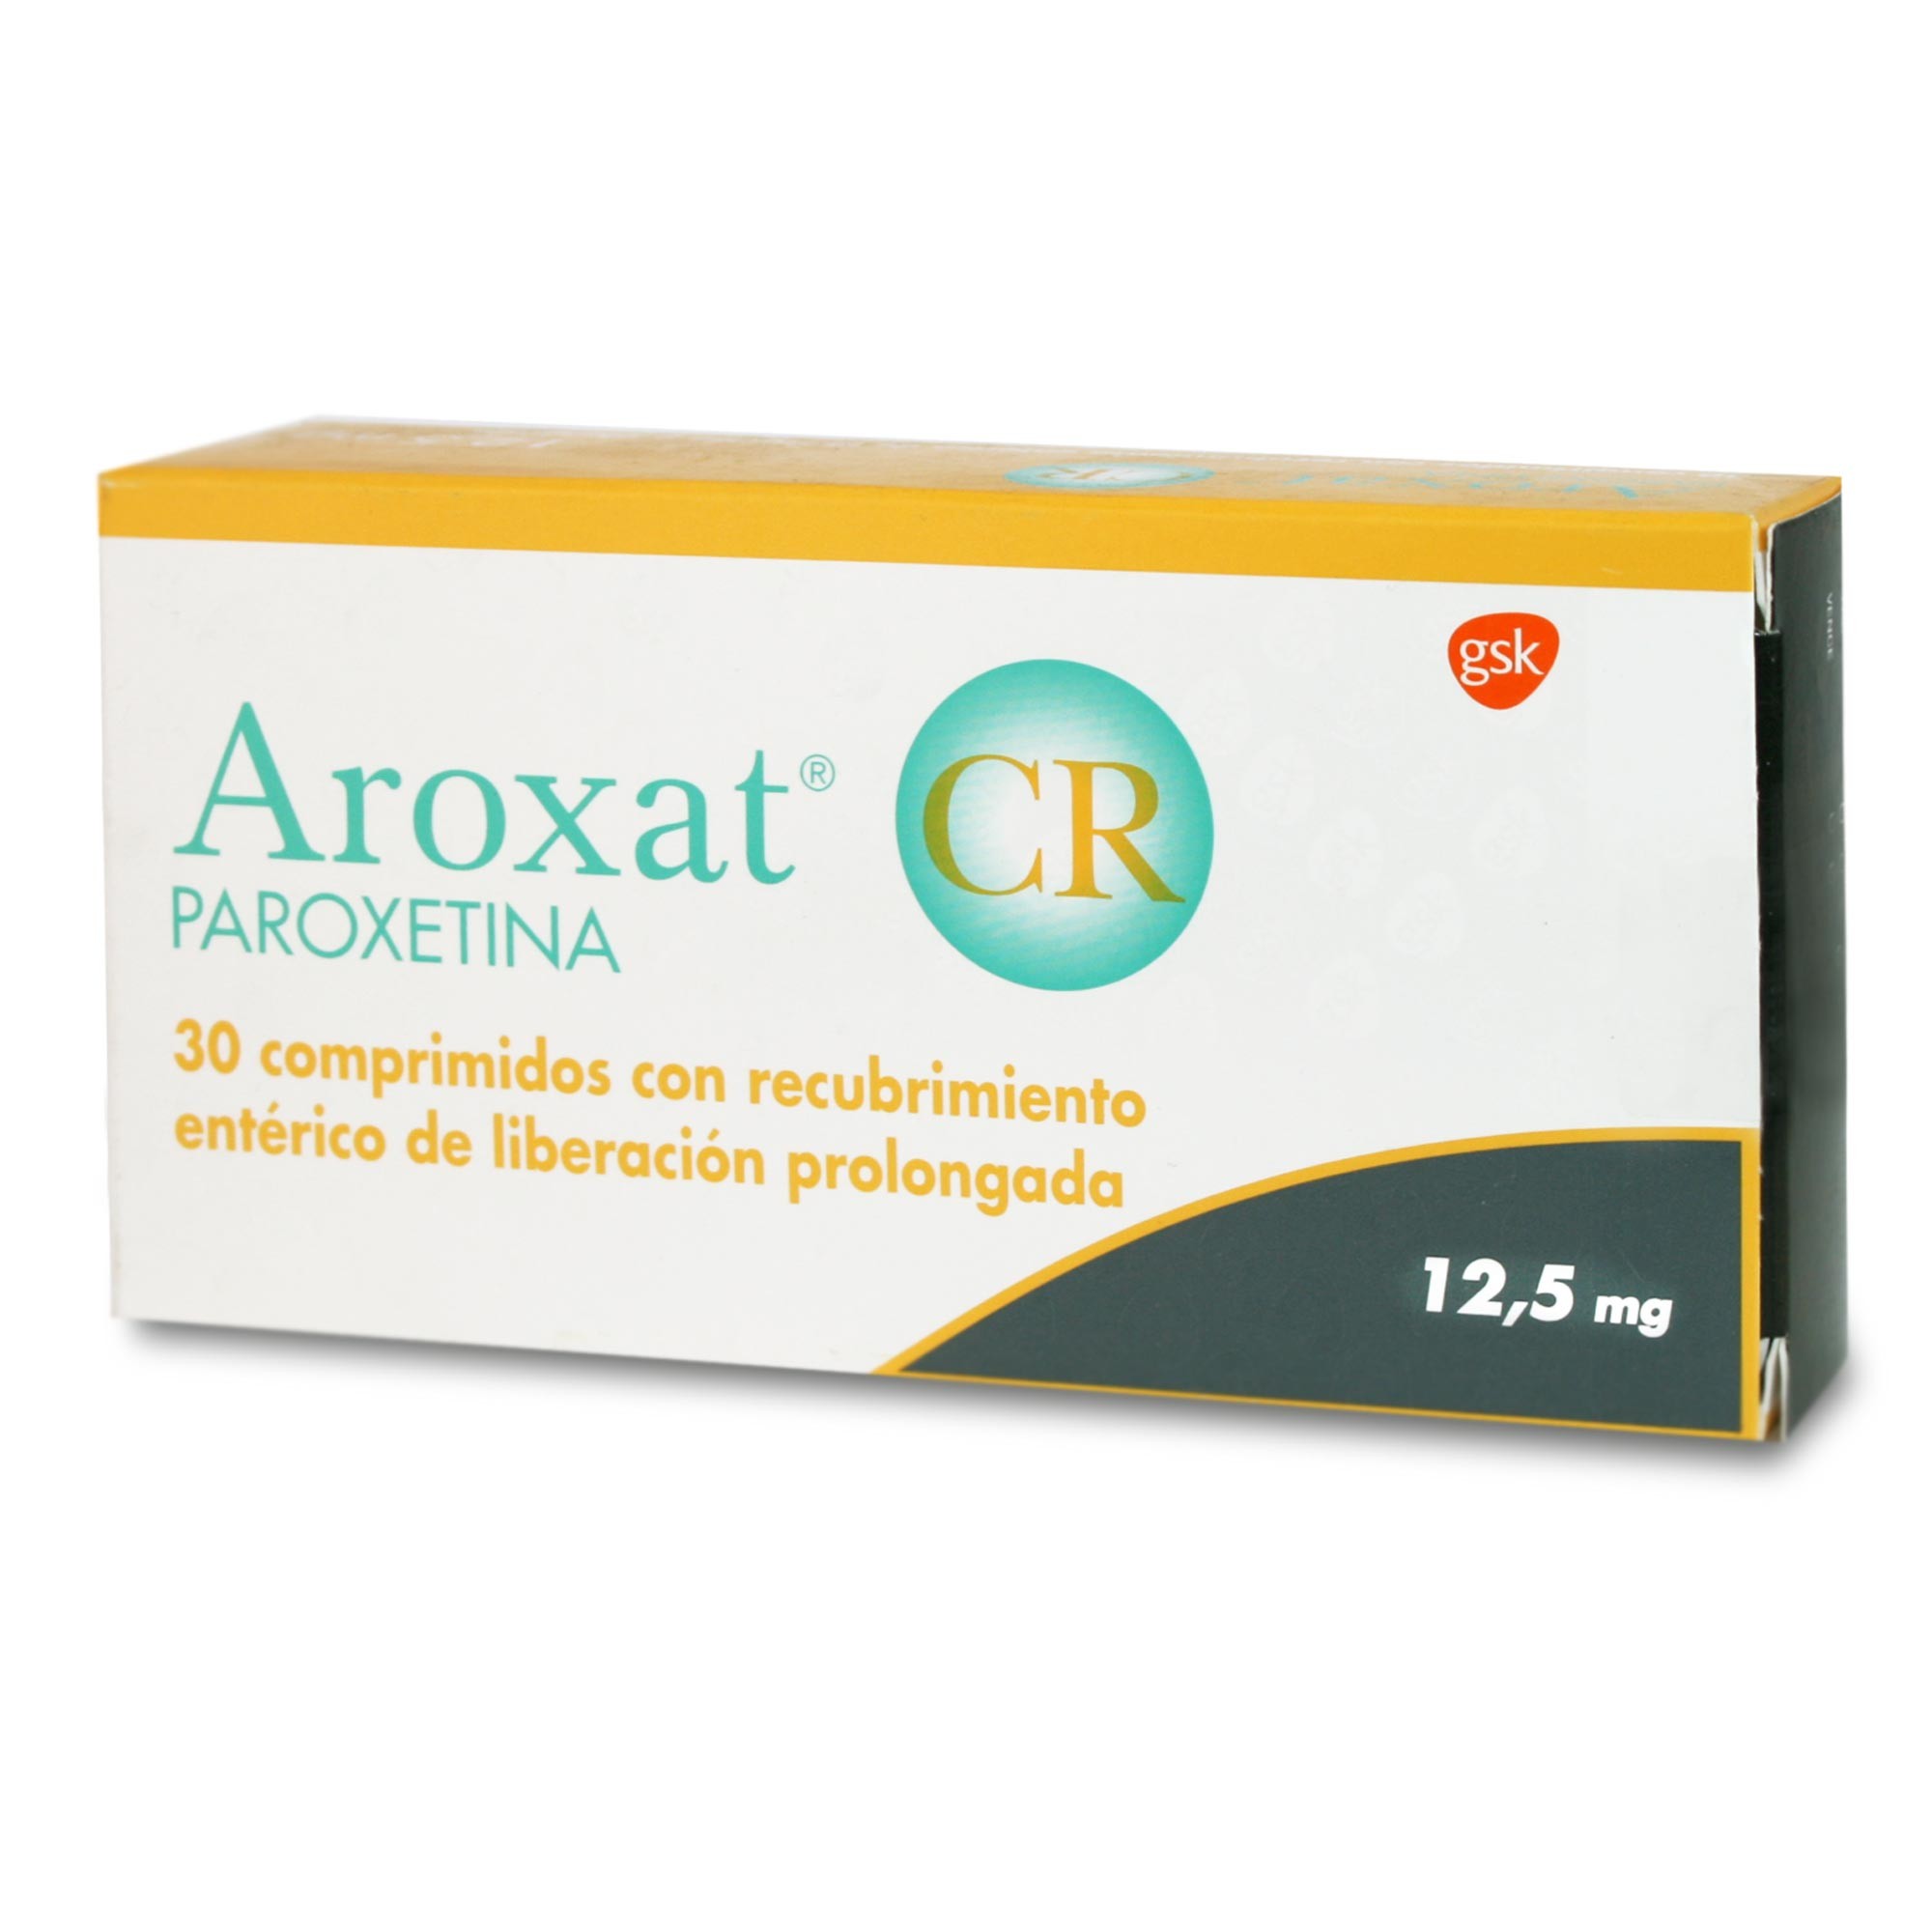 Aroxat CR Paroxetina 12,5 mg 30 Comprimido Liberacion Prolongada |  Farmacias Cruz Verde